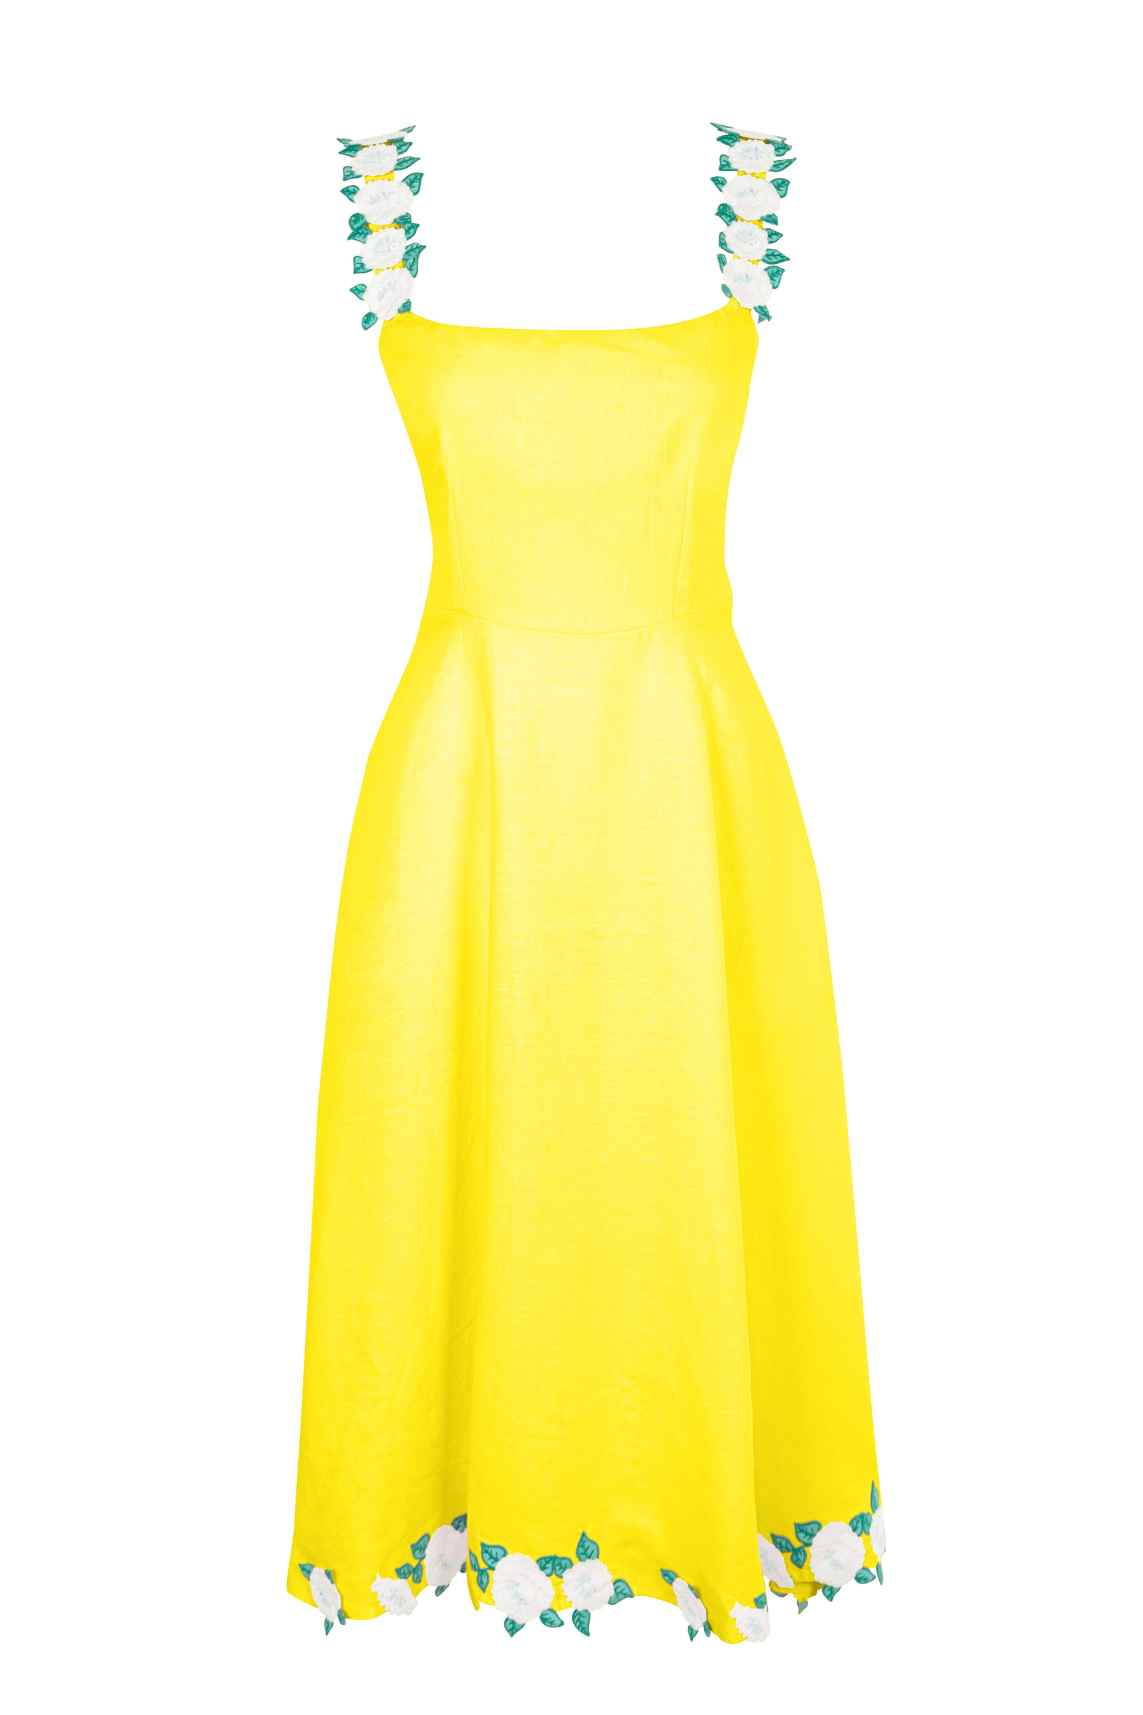 Fanm Mon x OTM Sasha Dress In Bright Yellow 